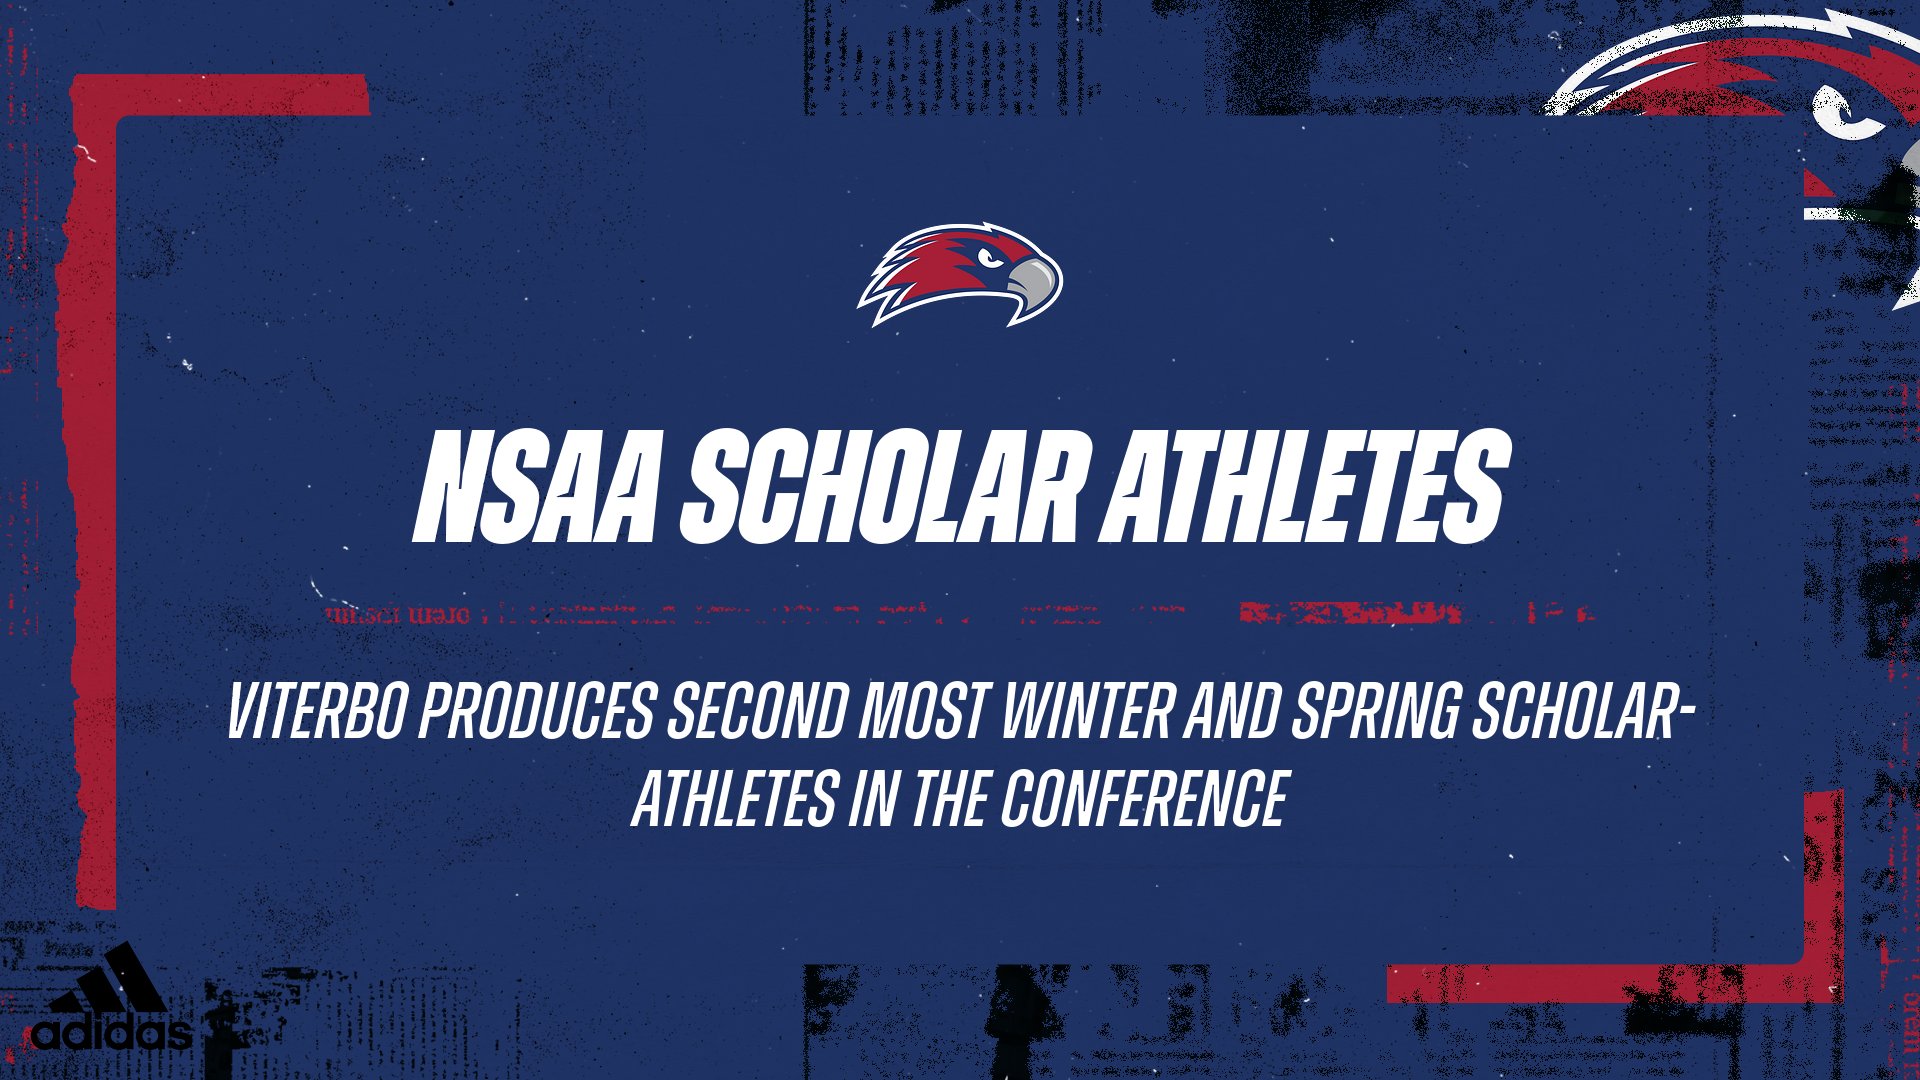 87 V-Hawks Named NSAA Scholar Athletes